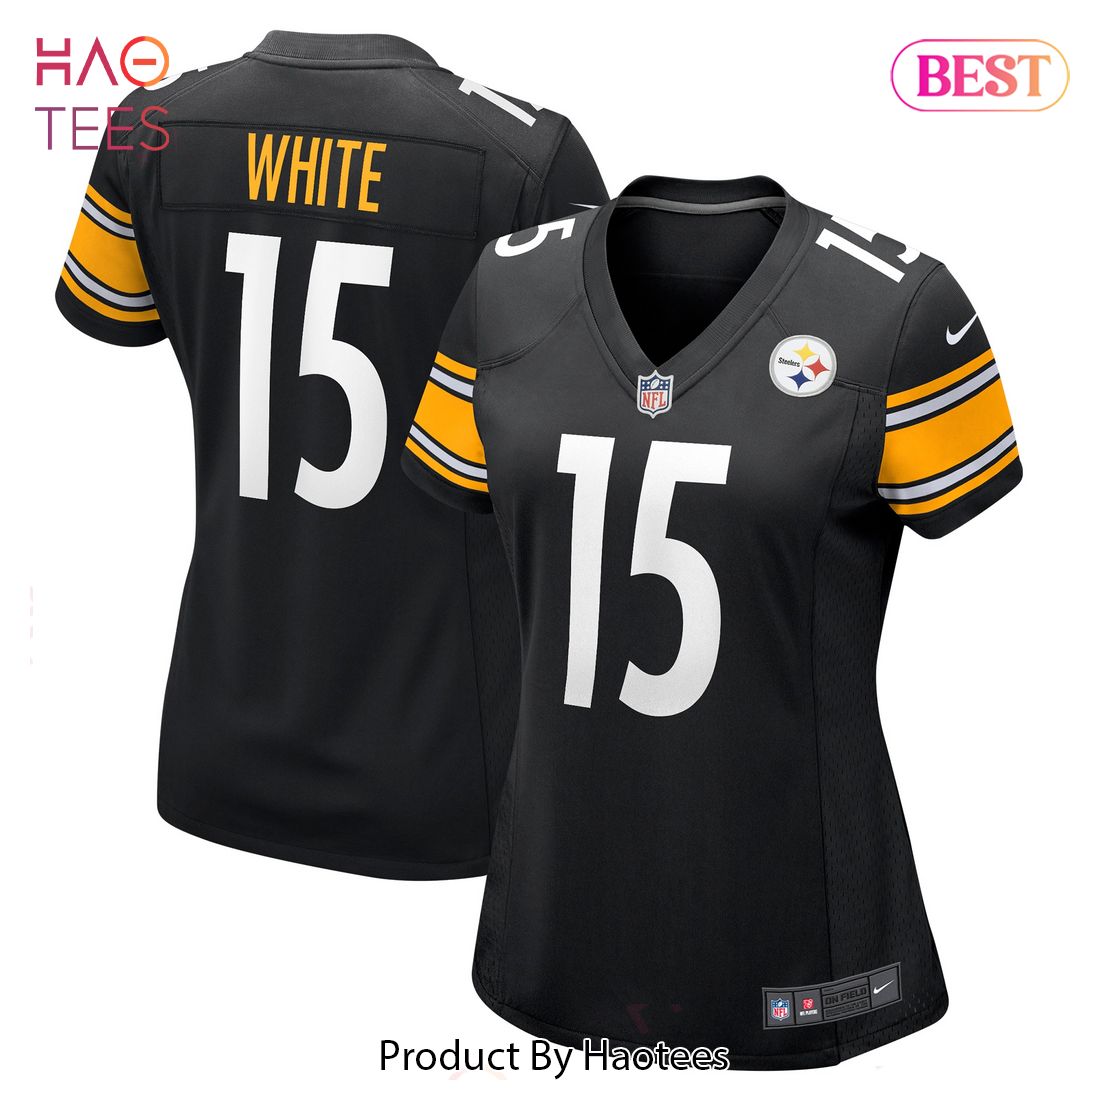 Cody White Pittsburgh Steelers Nike Women's Game Jersey Black